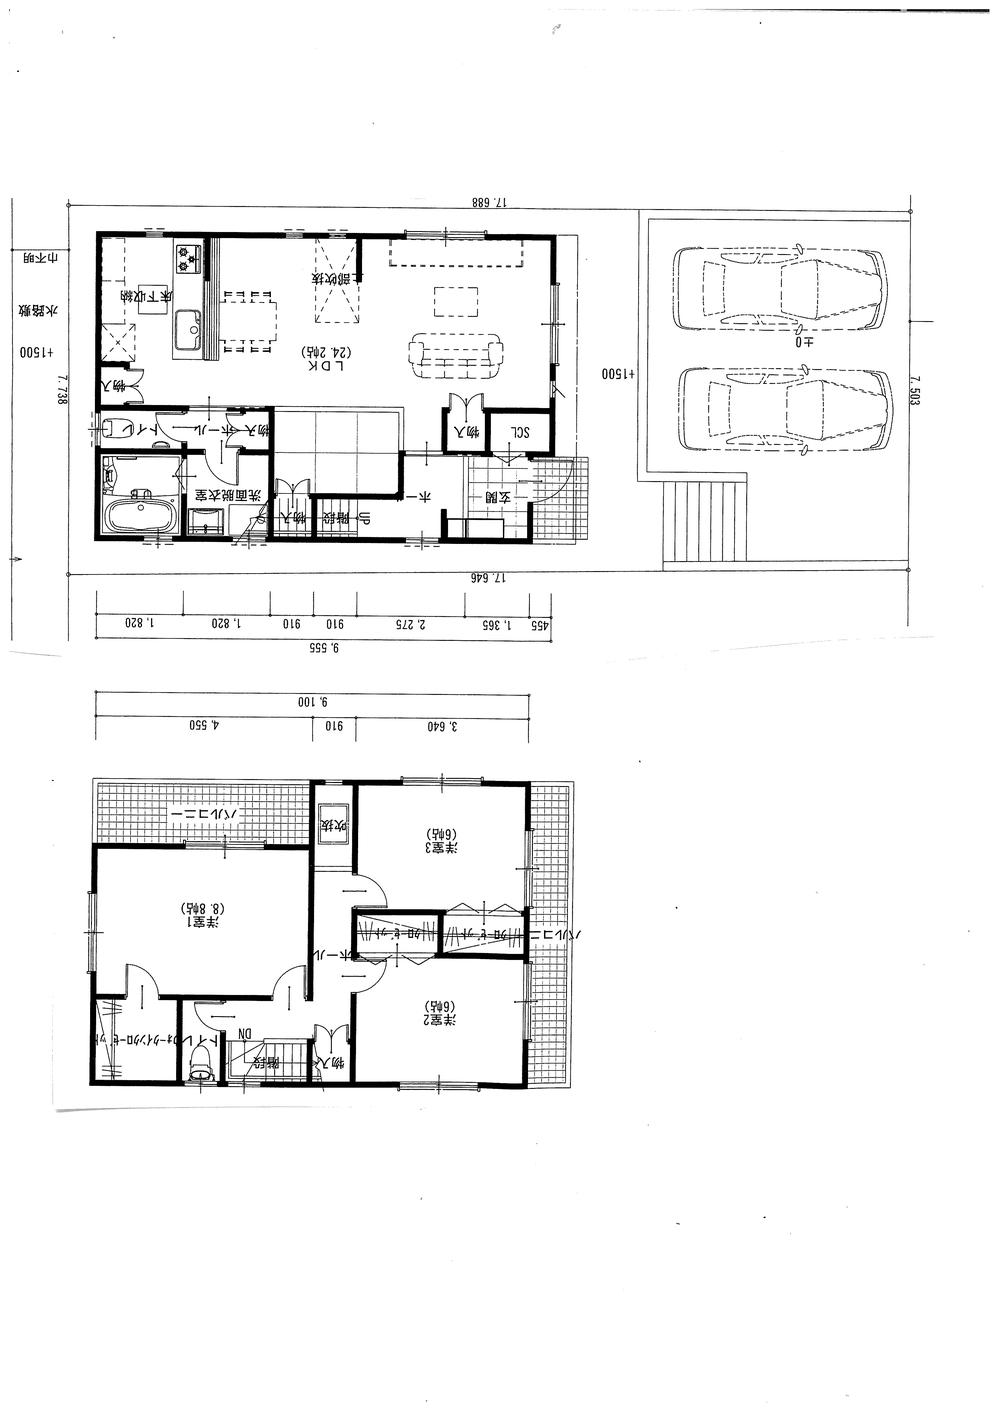 Building plan example (floor plan). Building plan example (A No. land) Building price 18.3 million yen, Building area 110.15 sq m